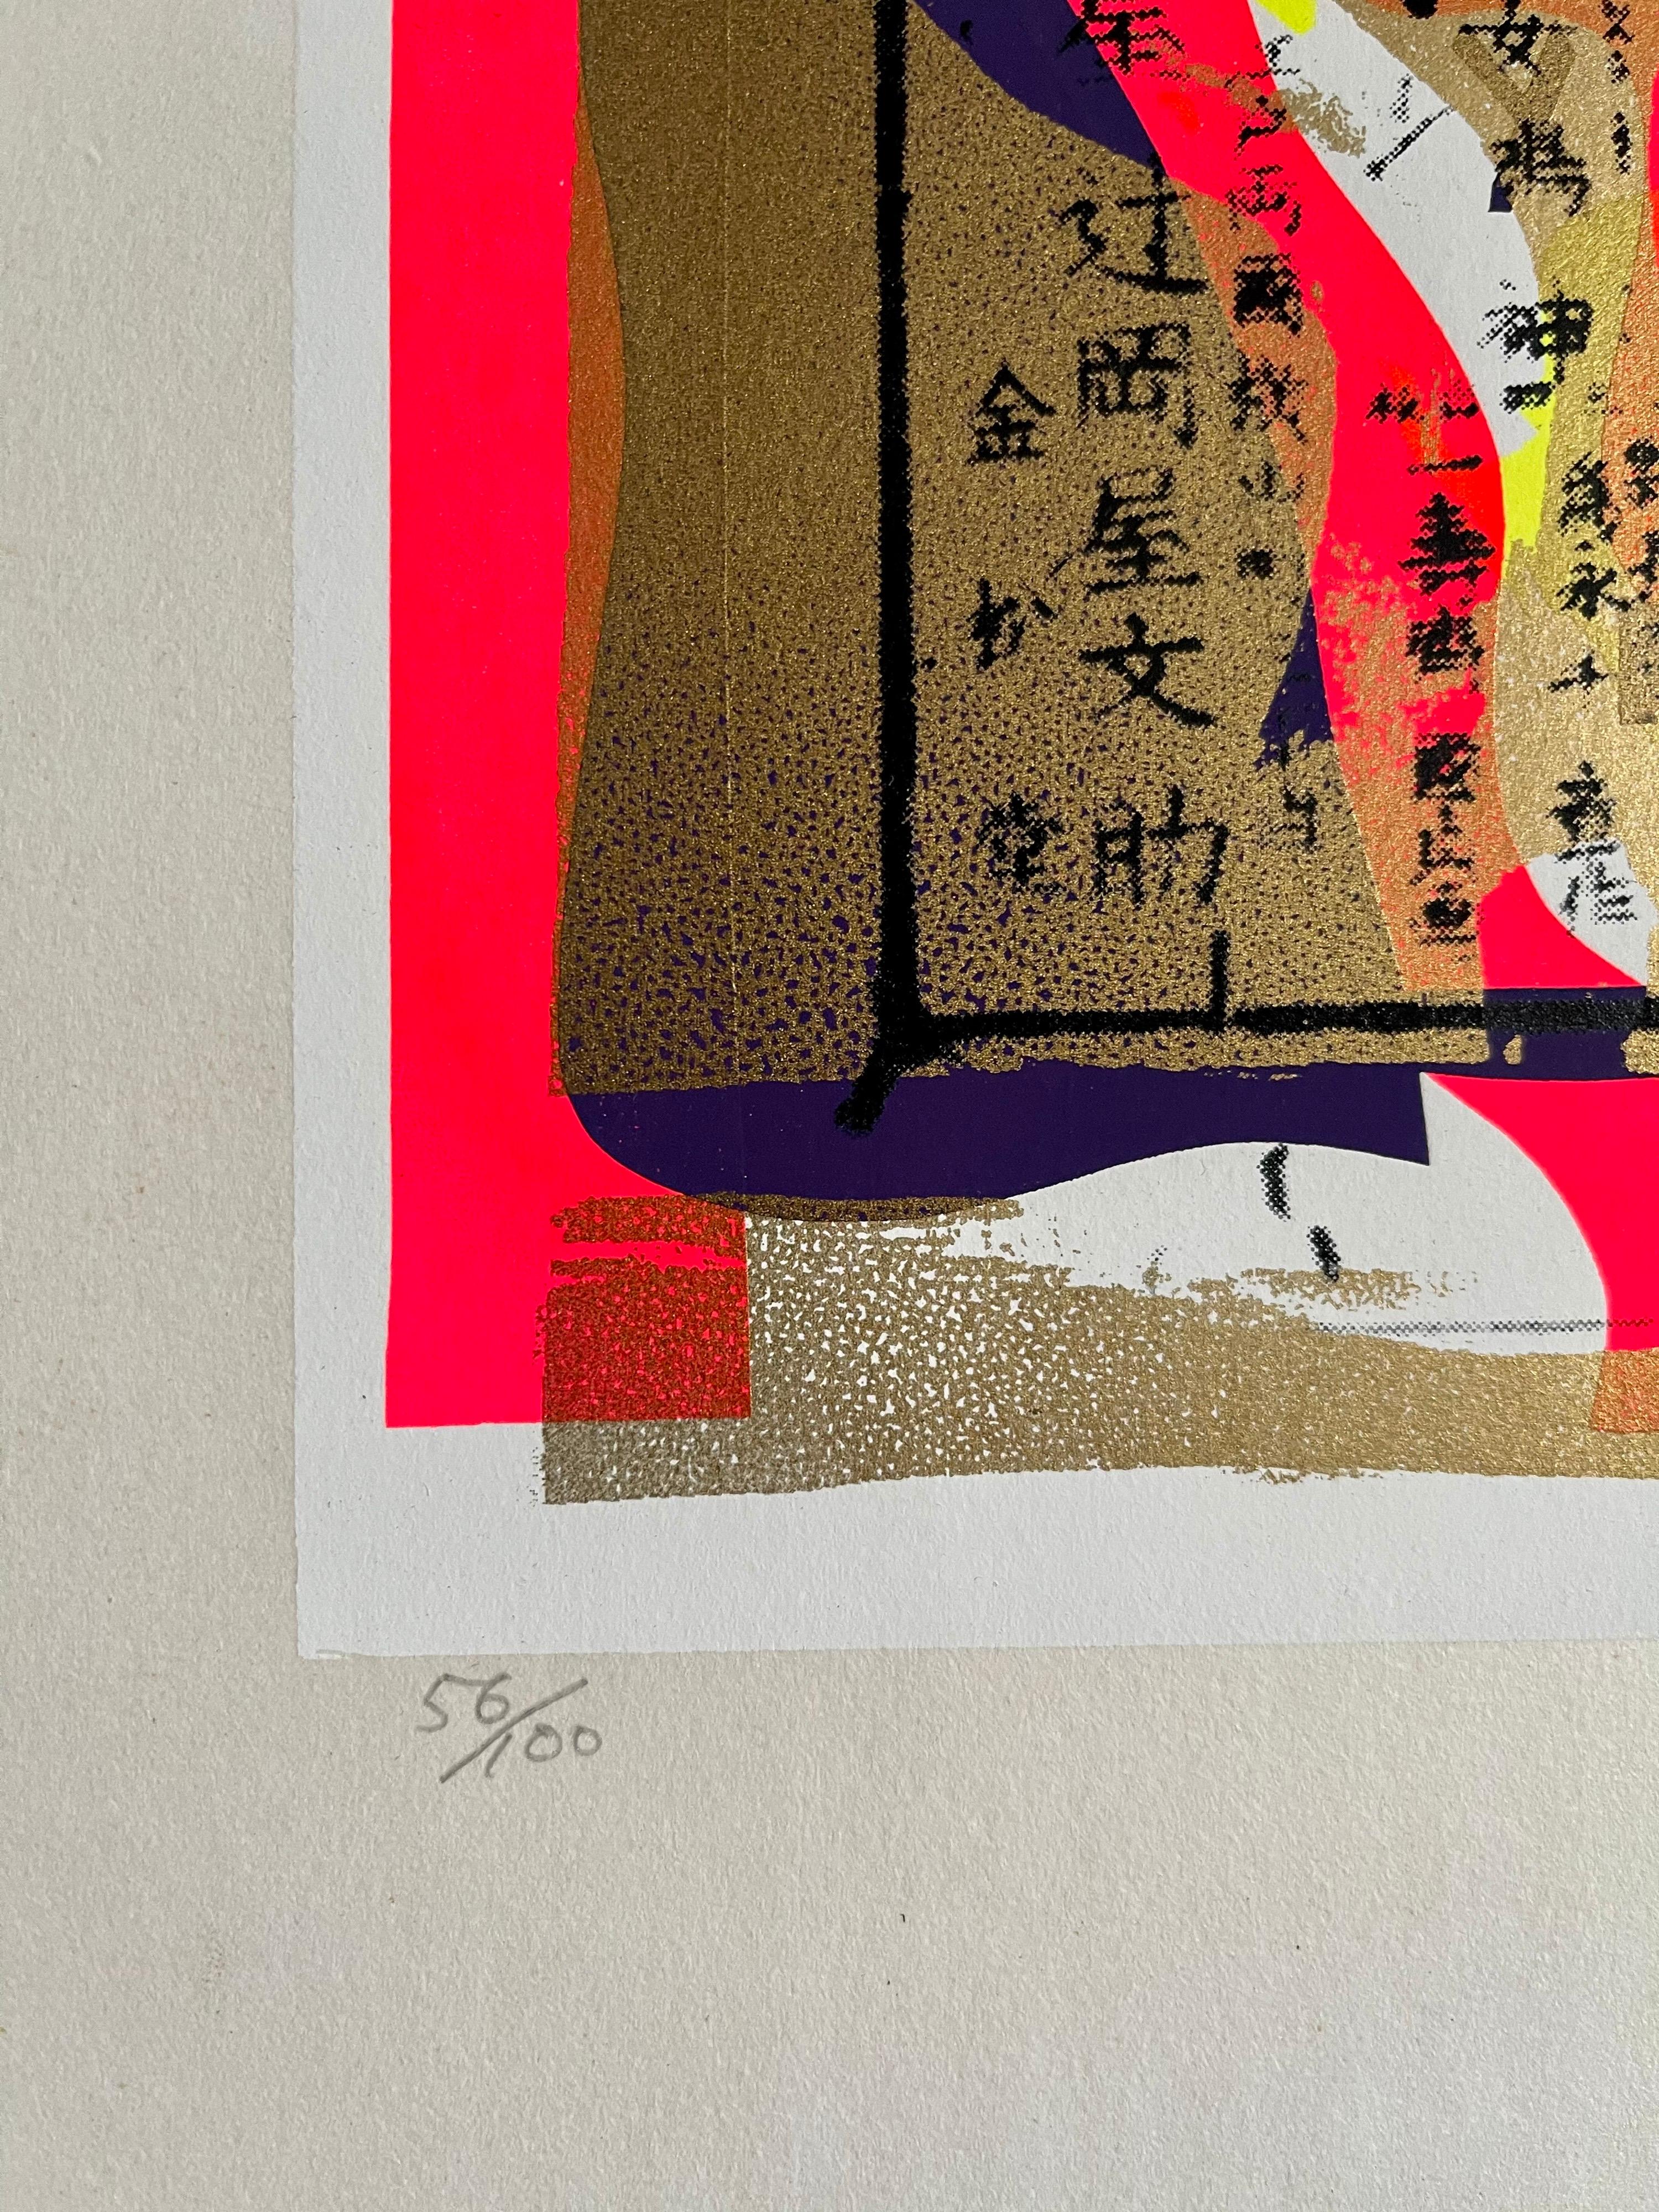 Silkscreen Day Glo Fluorescent 1960's Japanese Pop Art Print Samurai Kimono For Sale 2